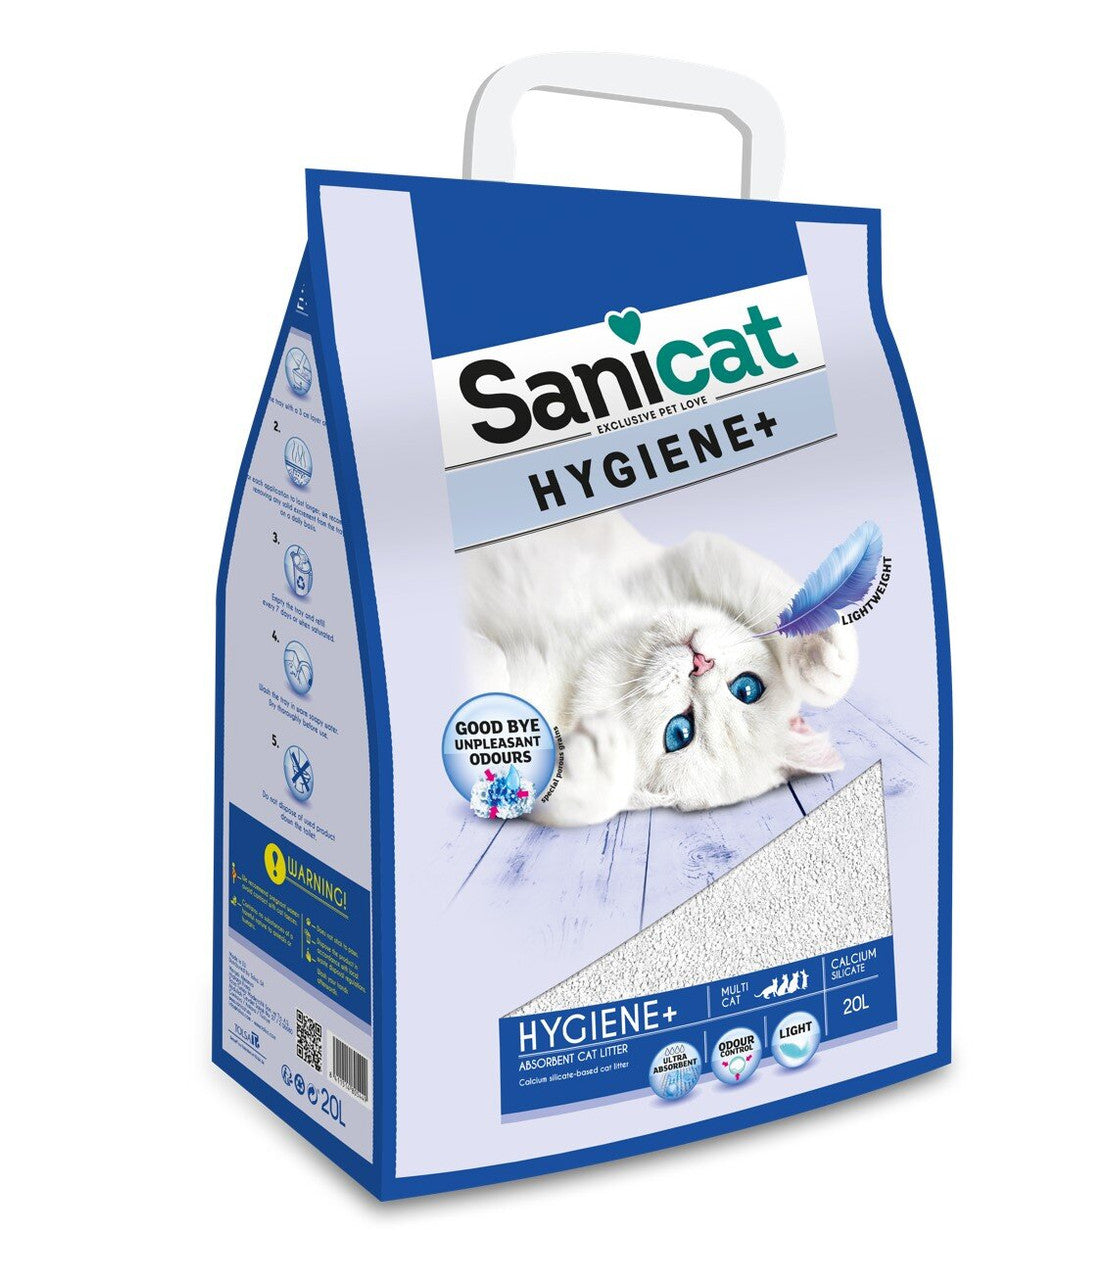 Sanicat Hygiene+ 20 L - Cat Litter